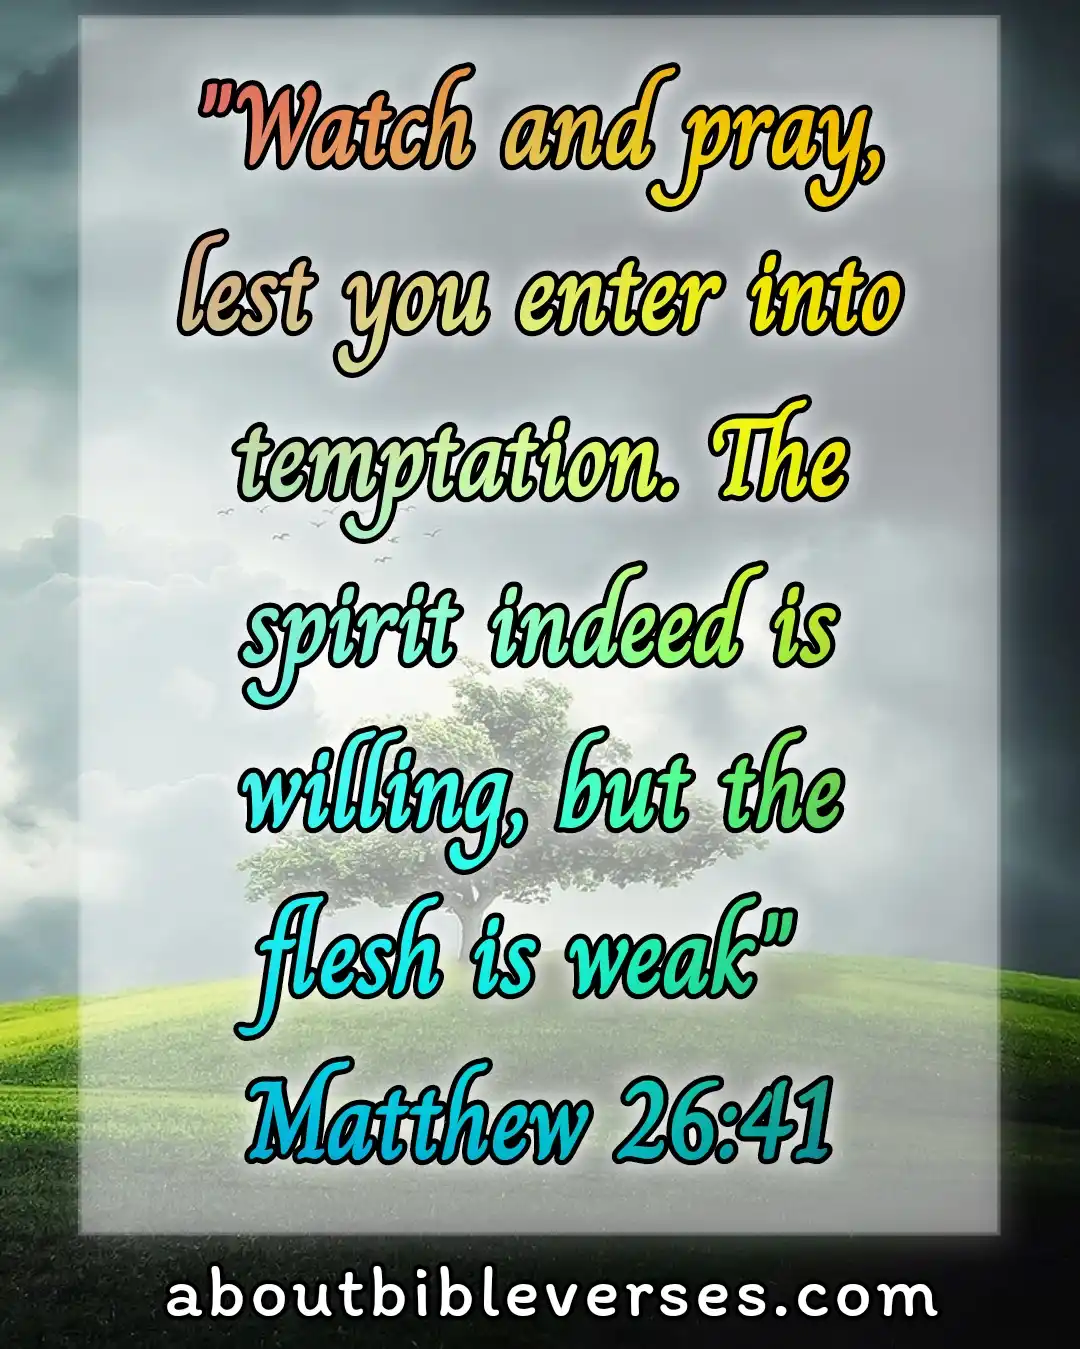 Today bible verse (Matthew 26:41)